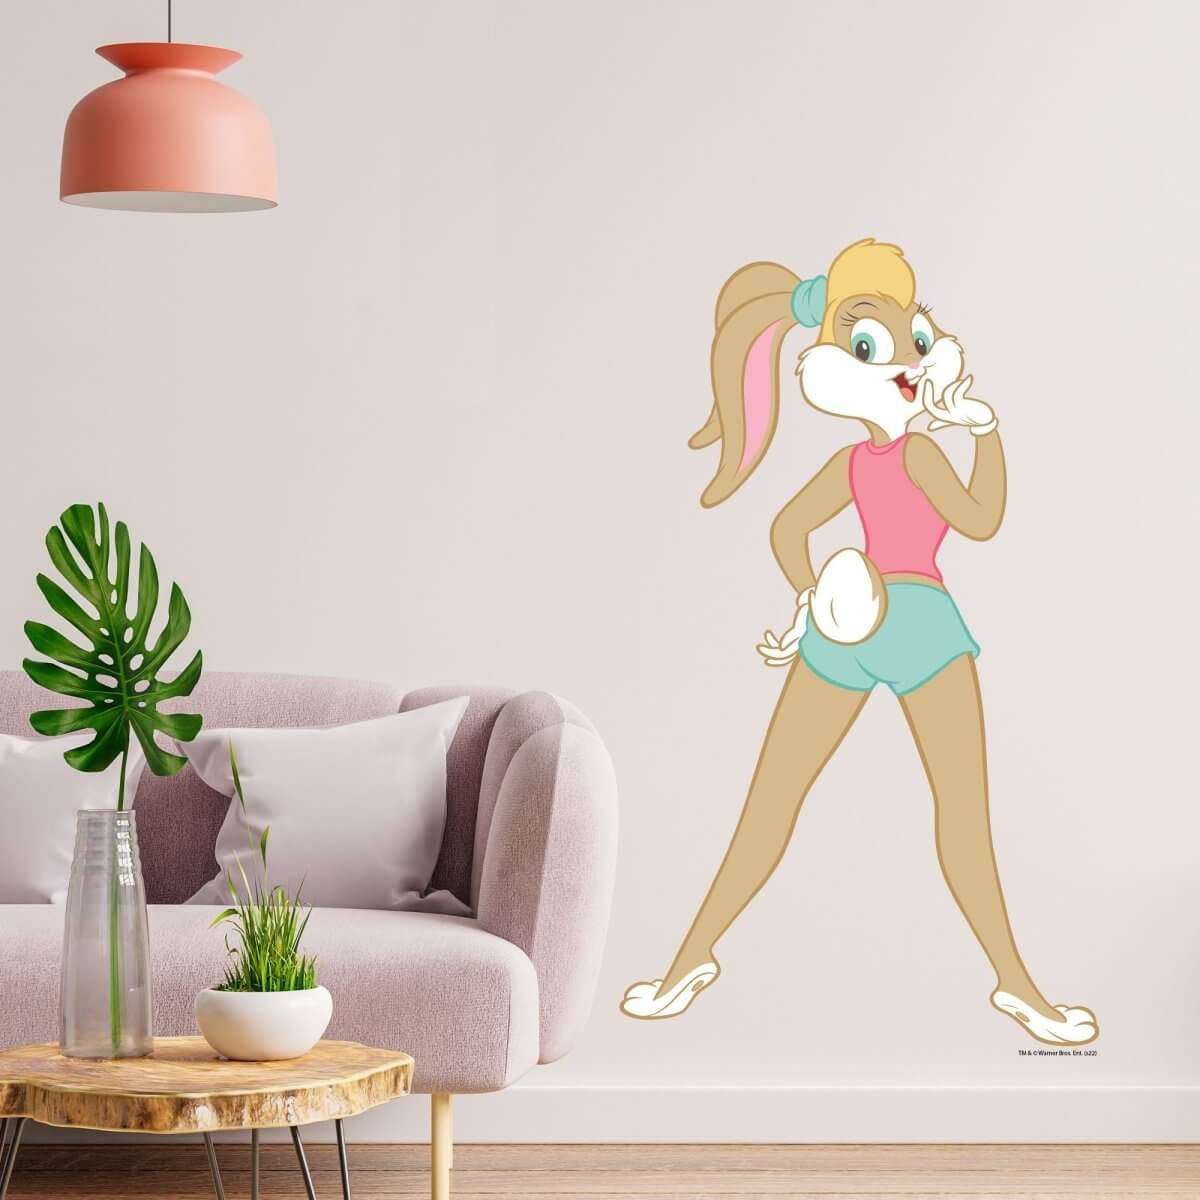 Kismet Decals Looney Tunes Lola Bunny Look Back Licensed Wall Sticker - Easy DIY Home & Kids Room Decor Wall Decal Art - Kismet Decals